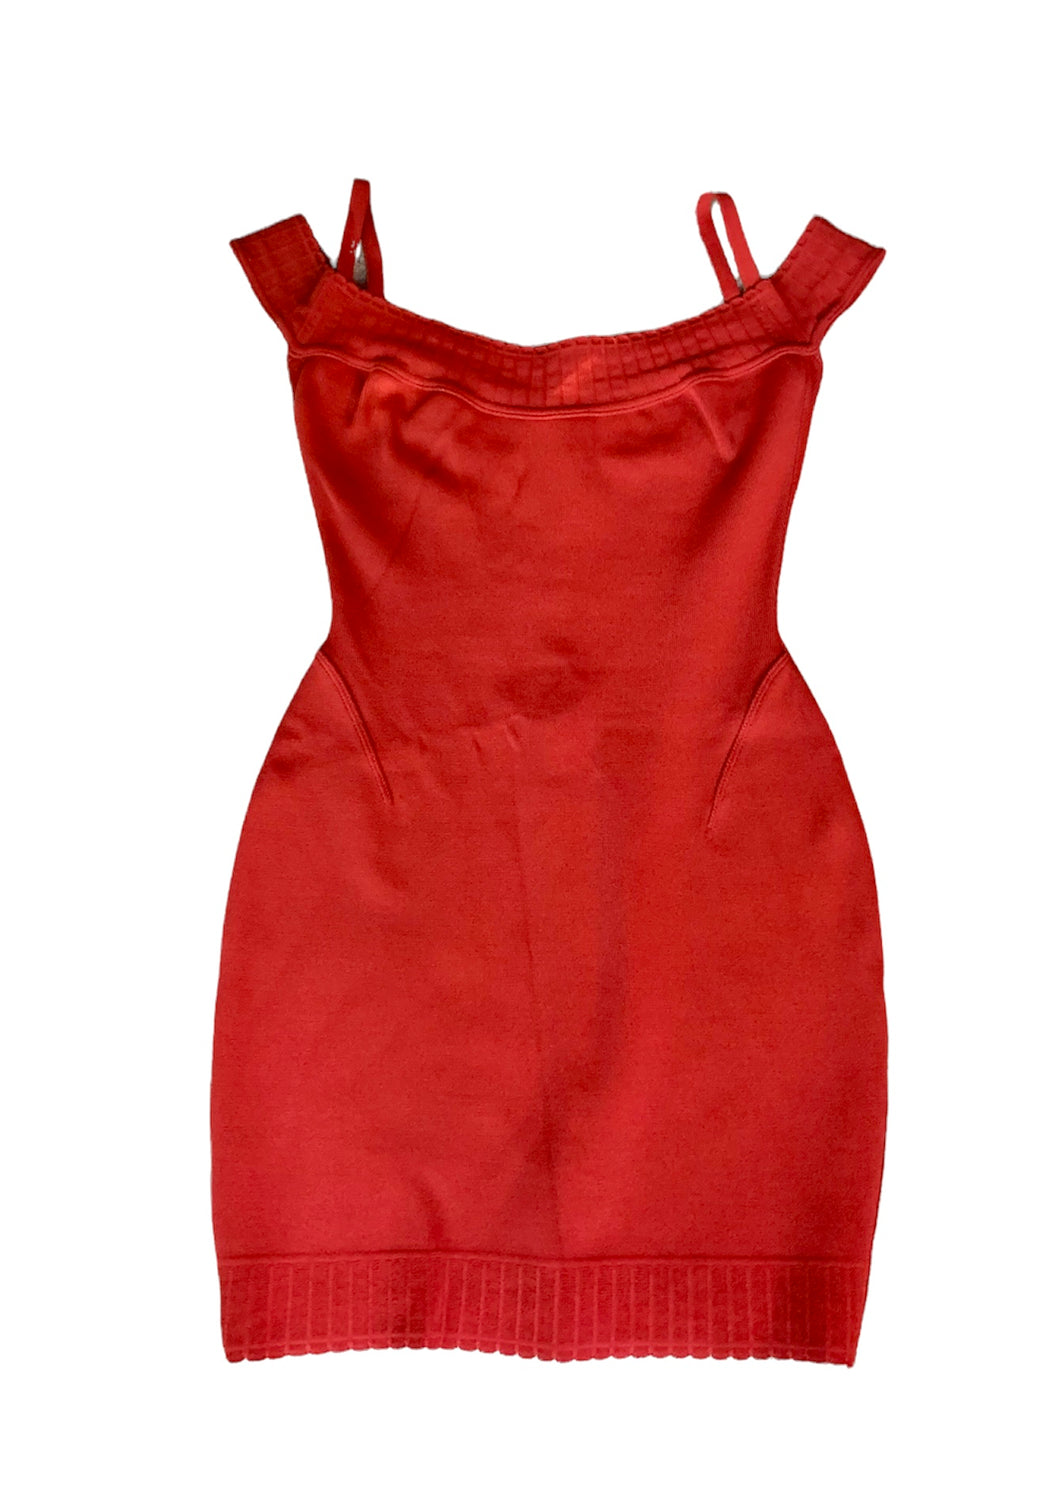 AZZEDINE ALAIA RED S/S 1992 VINTAGE OFF SHOULDER BODYCON DRESS